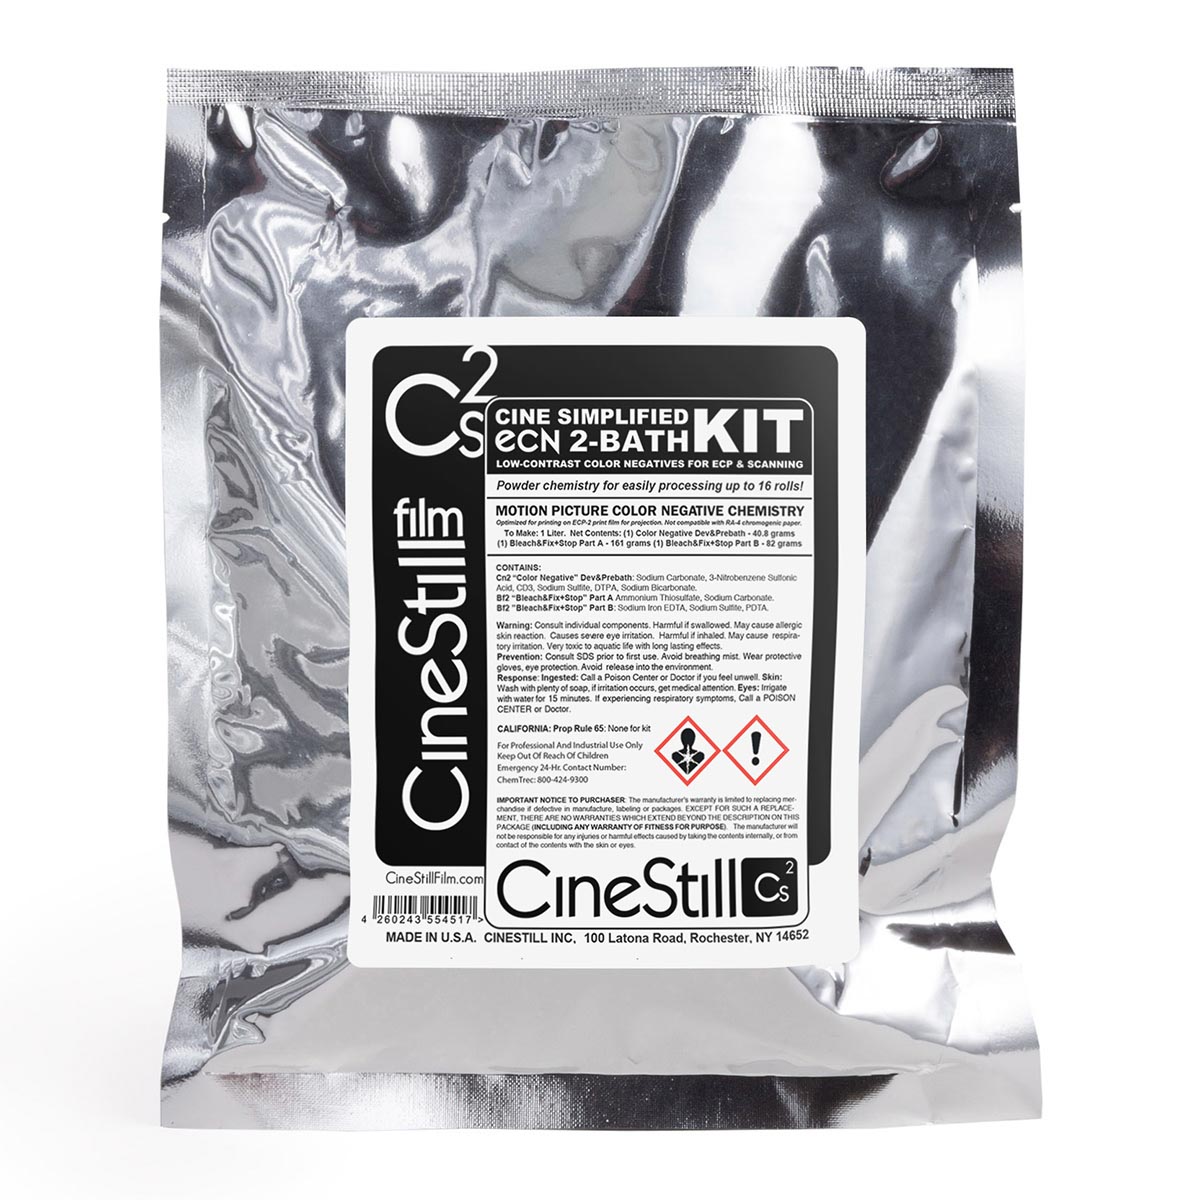 Cs2 Cine Simplified - ECN-2 Bath Kit